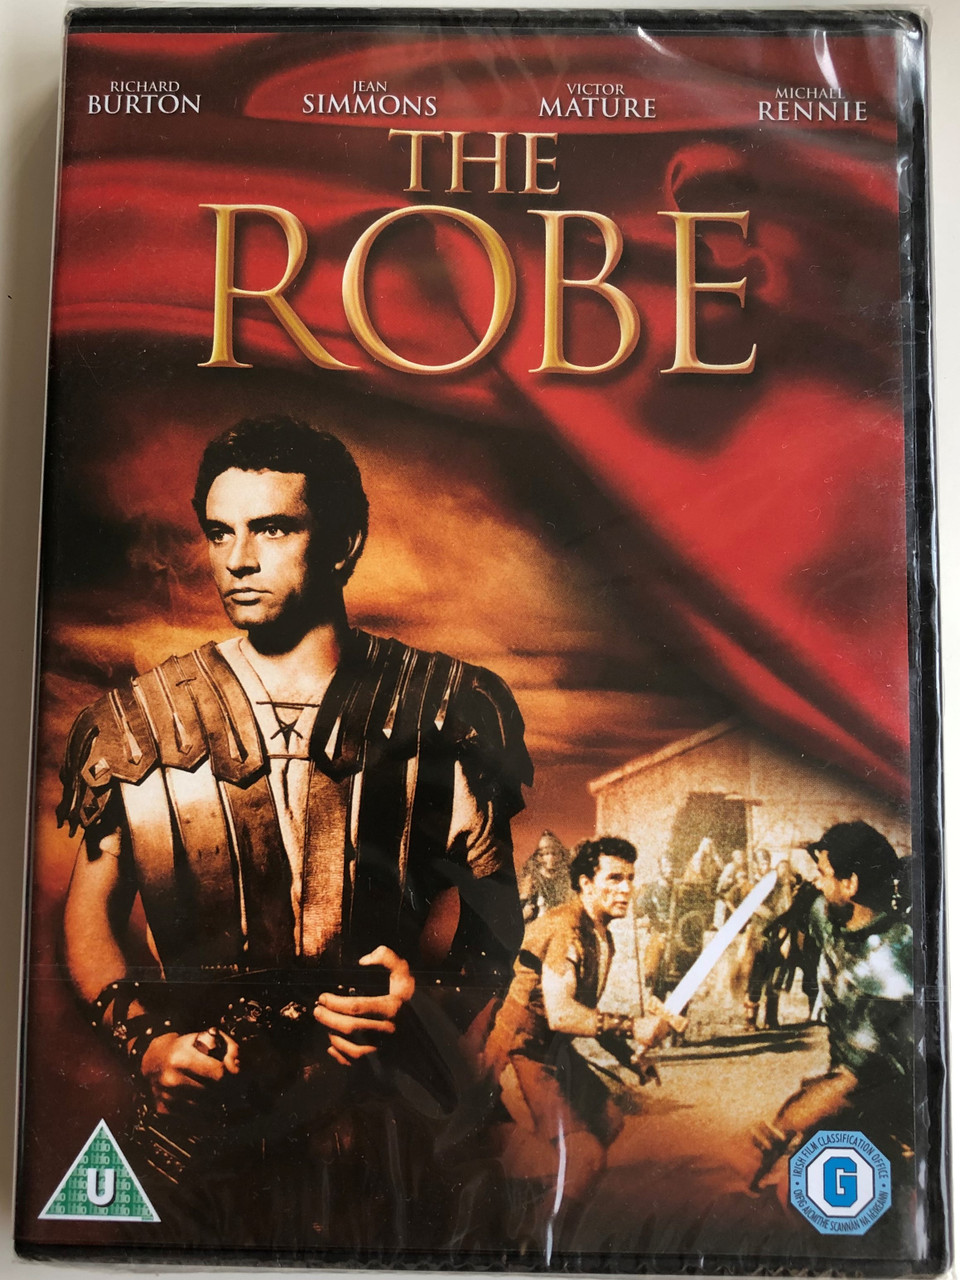 The Robe DVD 1953 / Directed by Henry Koster / Starring: Richard Burton,  Jean Simmons, Victor Mature, Michael Rennie - bibleinmylanguage